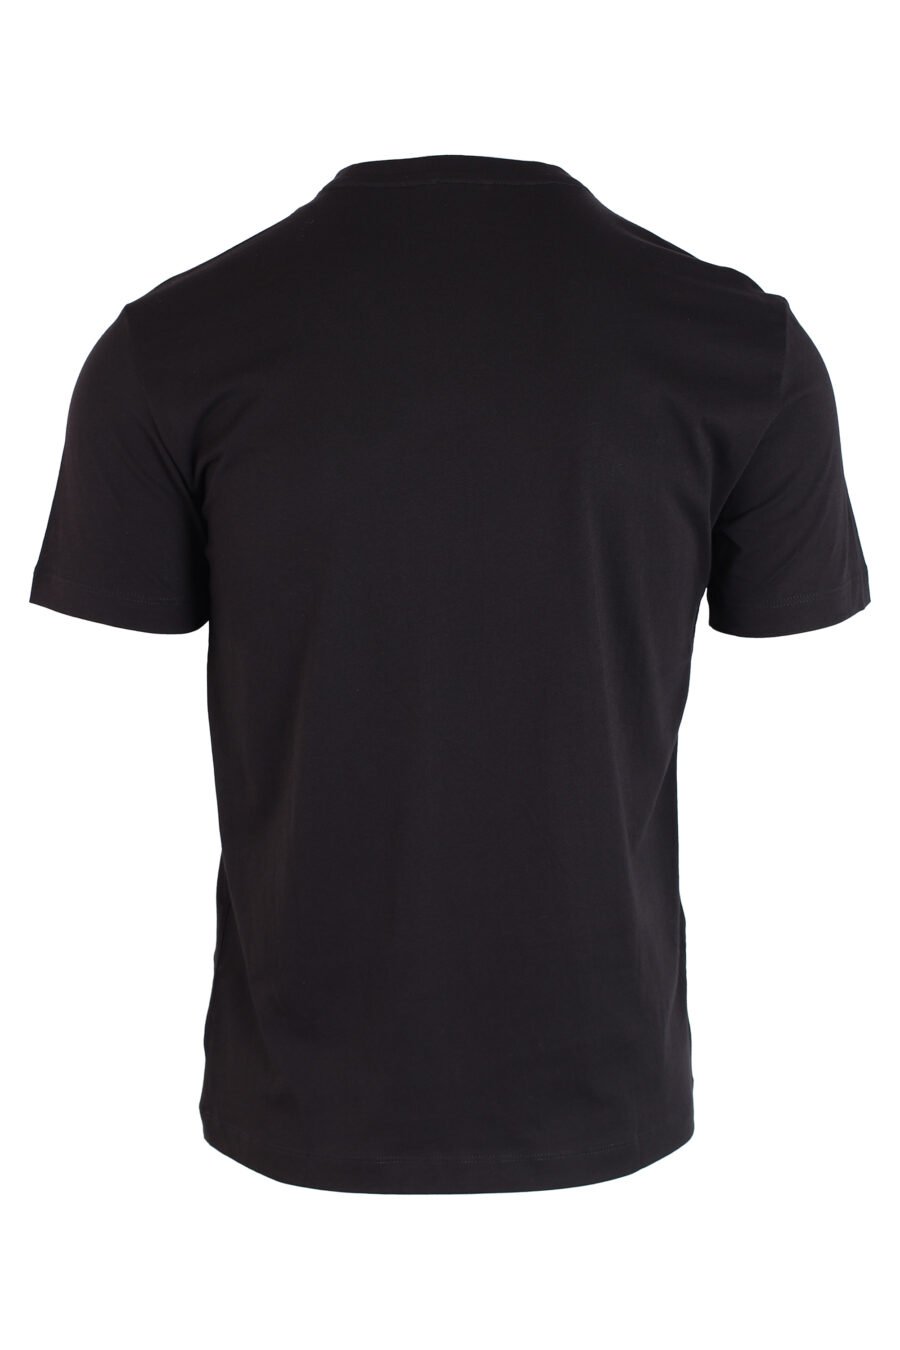 Camiseta negra con maxilogo dorado y puntos - IMG 3248